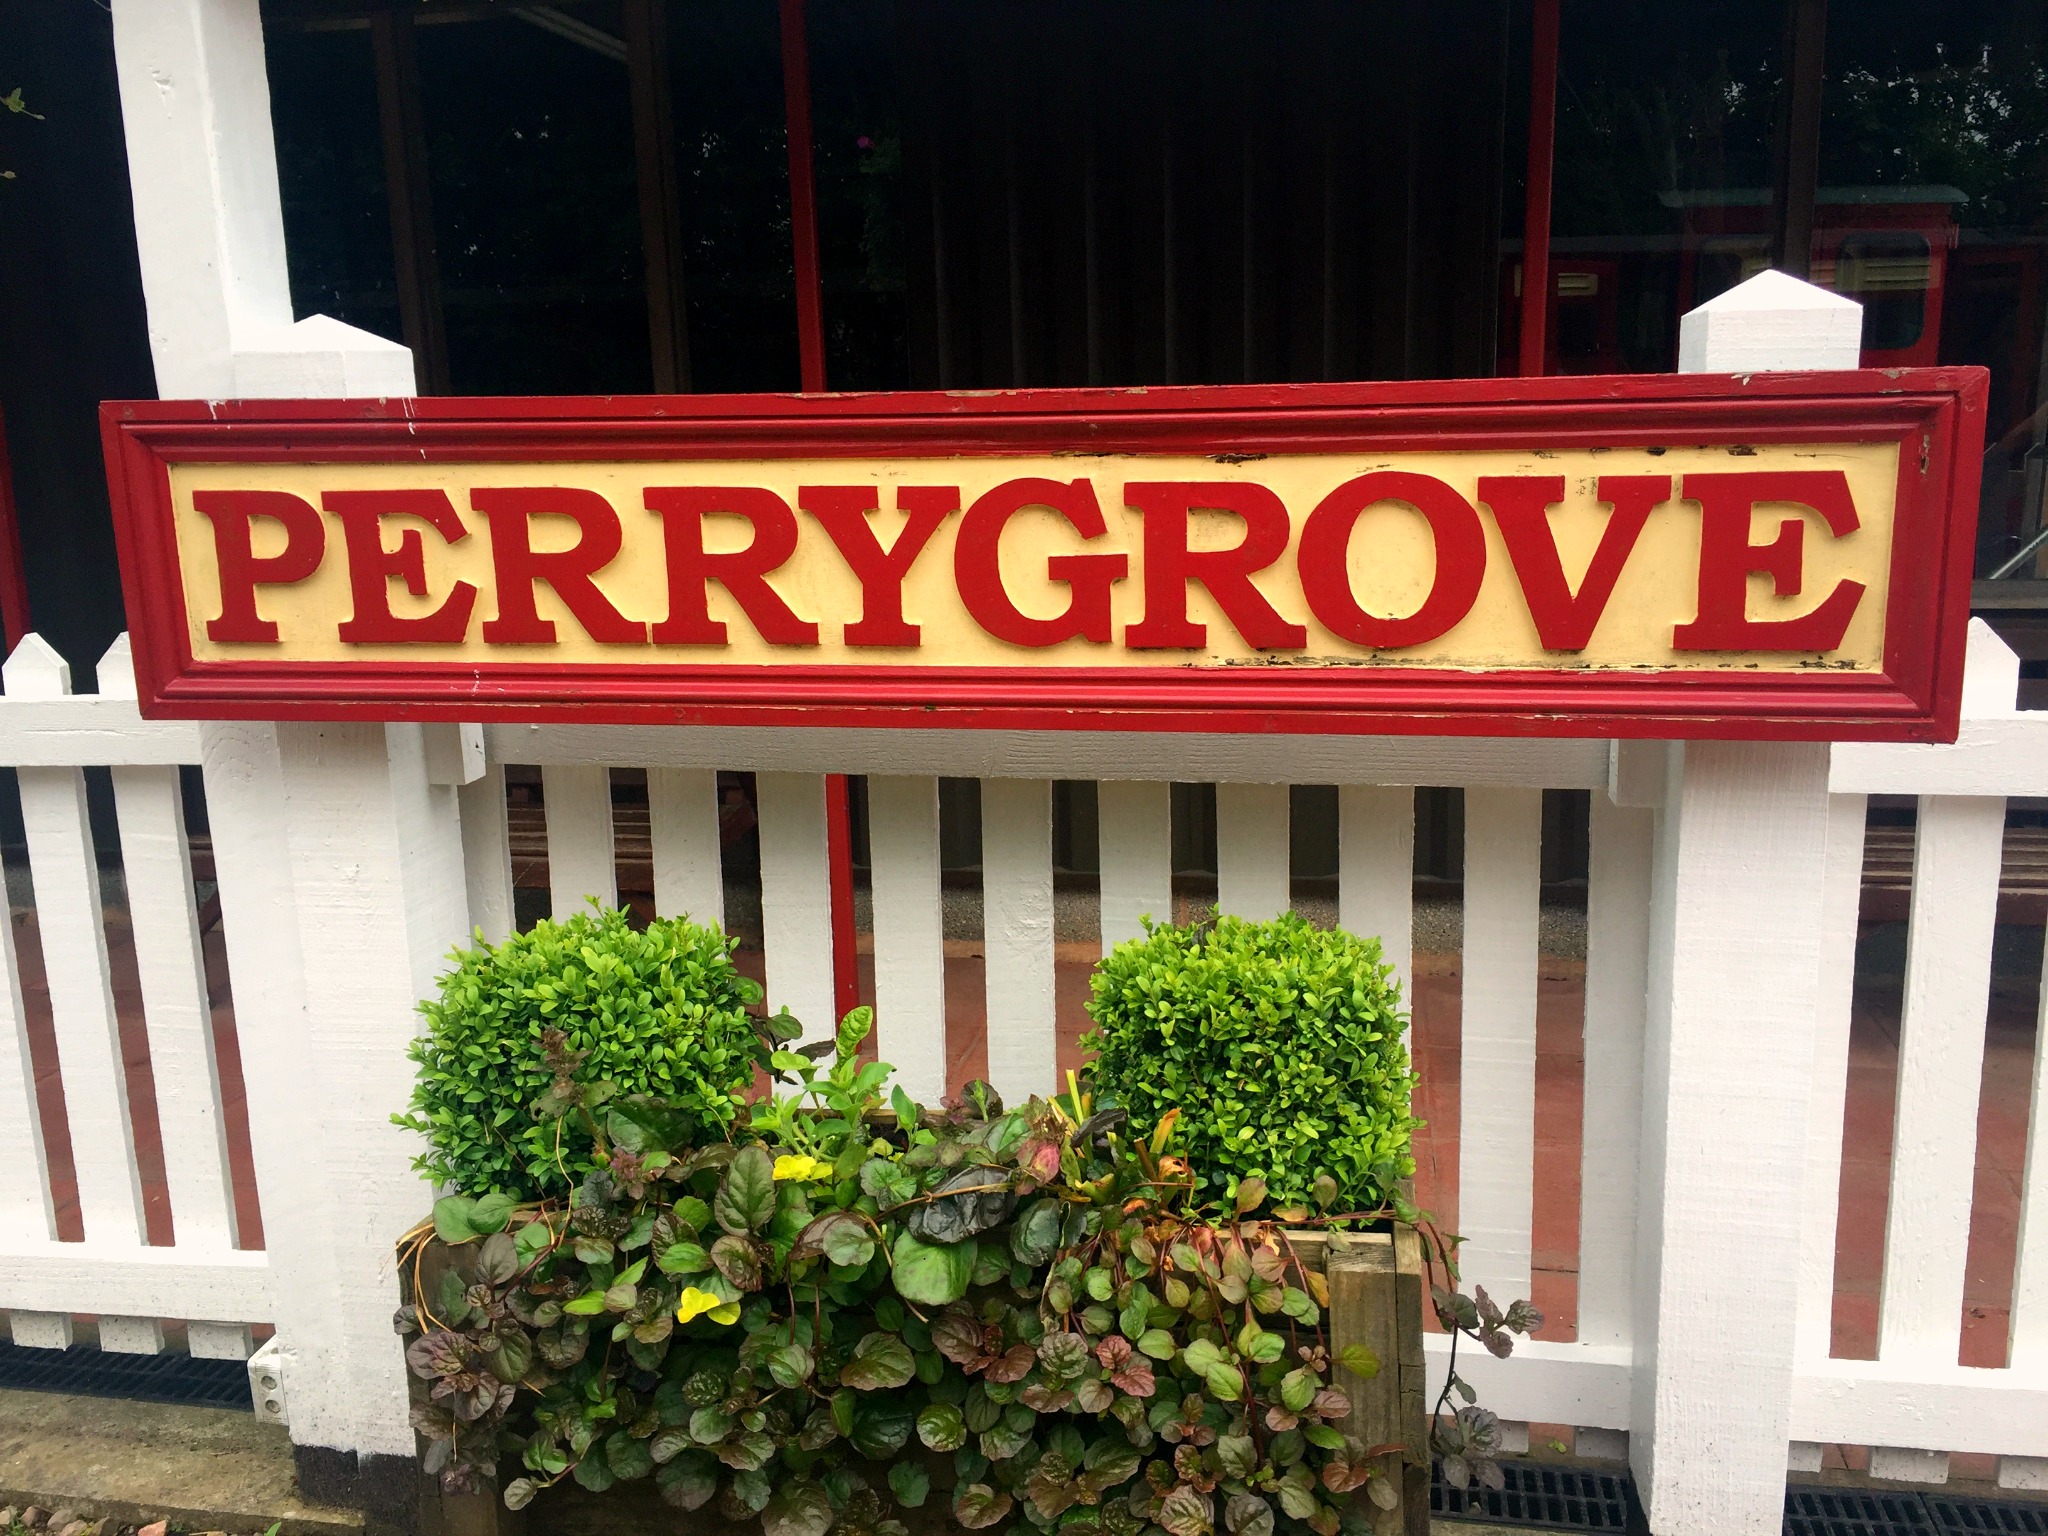 Perrygrove Railway